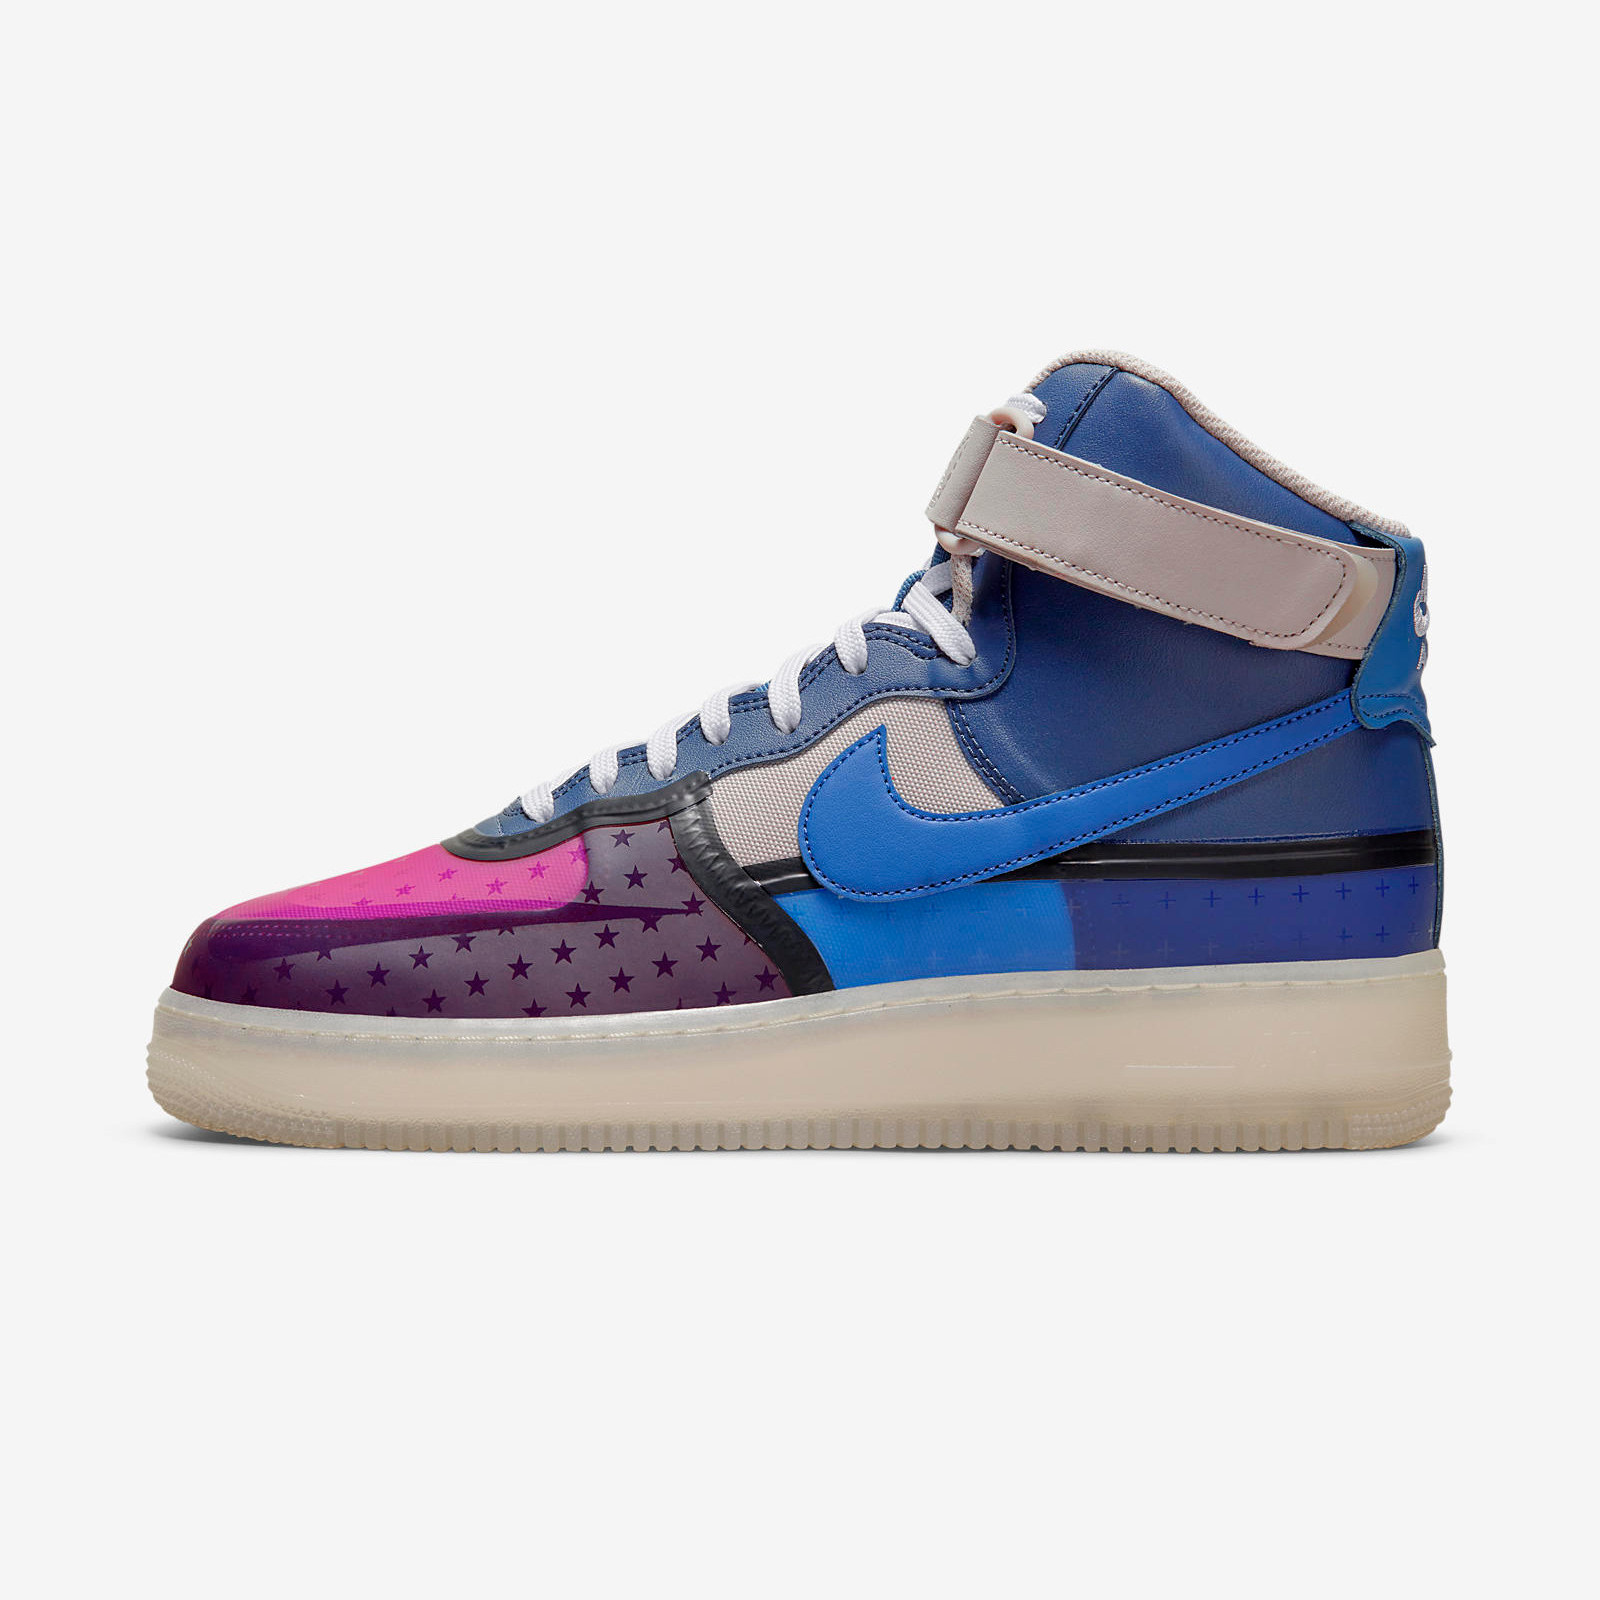 Nike Air Force 1 High 07
Thunder Blue / Pink Prime